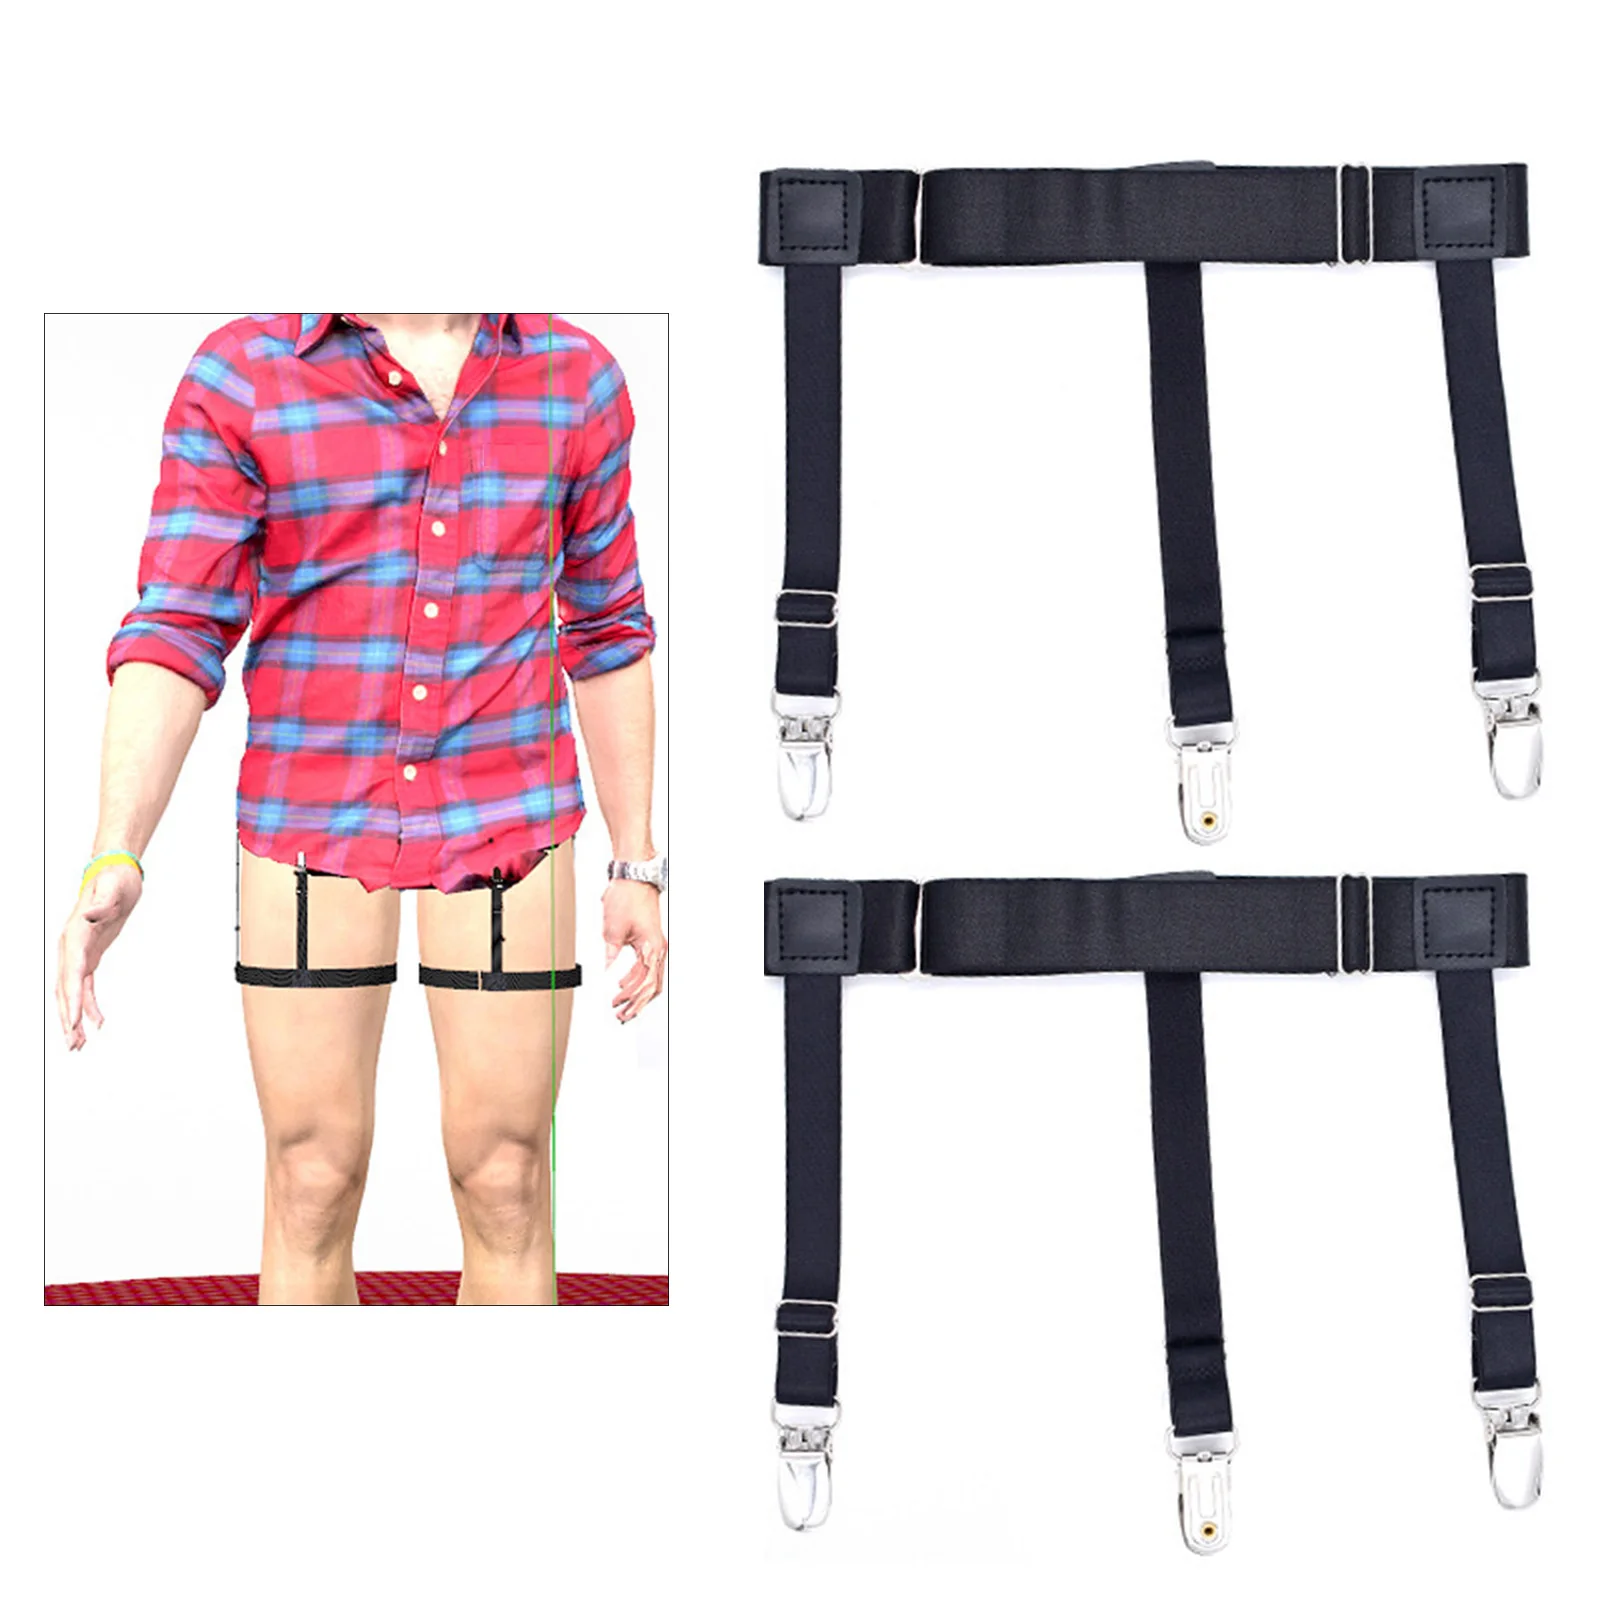 2x Shirt Stays Leg Garter Suspender Holders Adjustable Professional Men